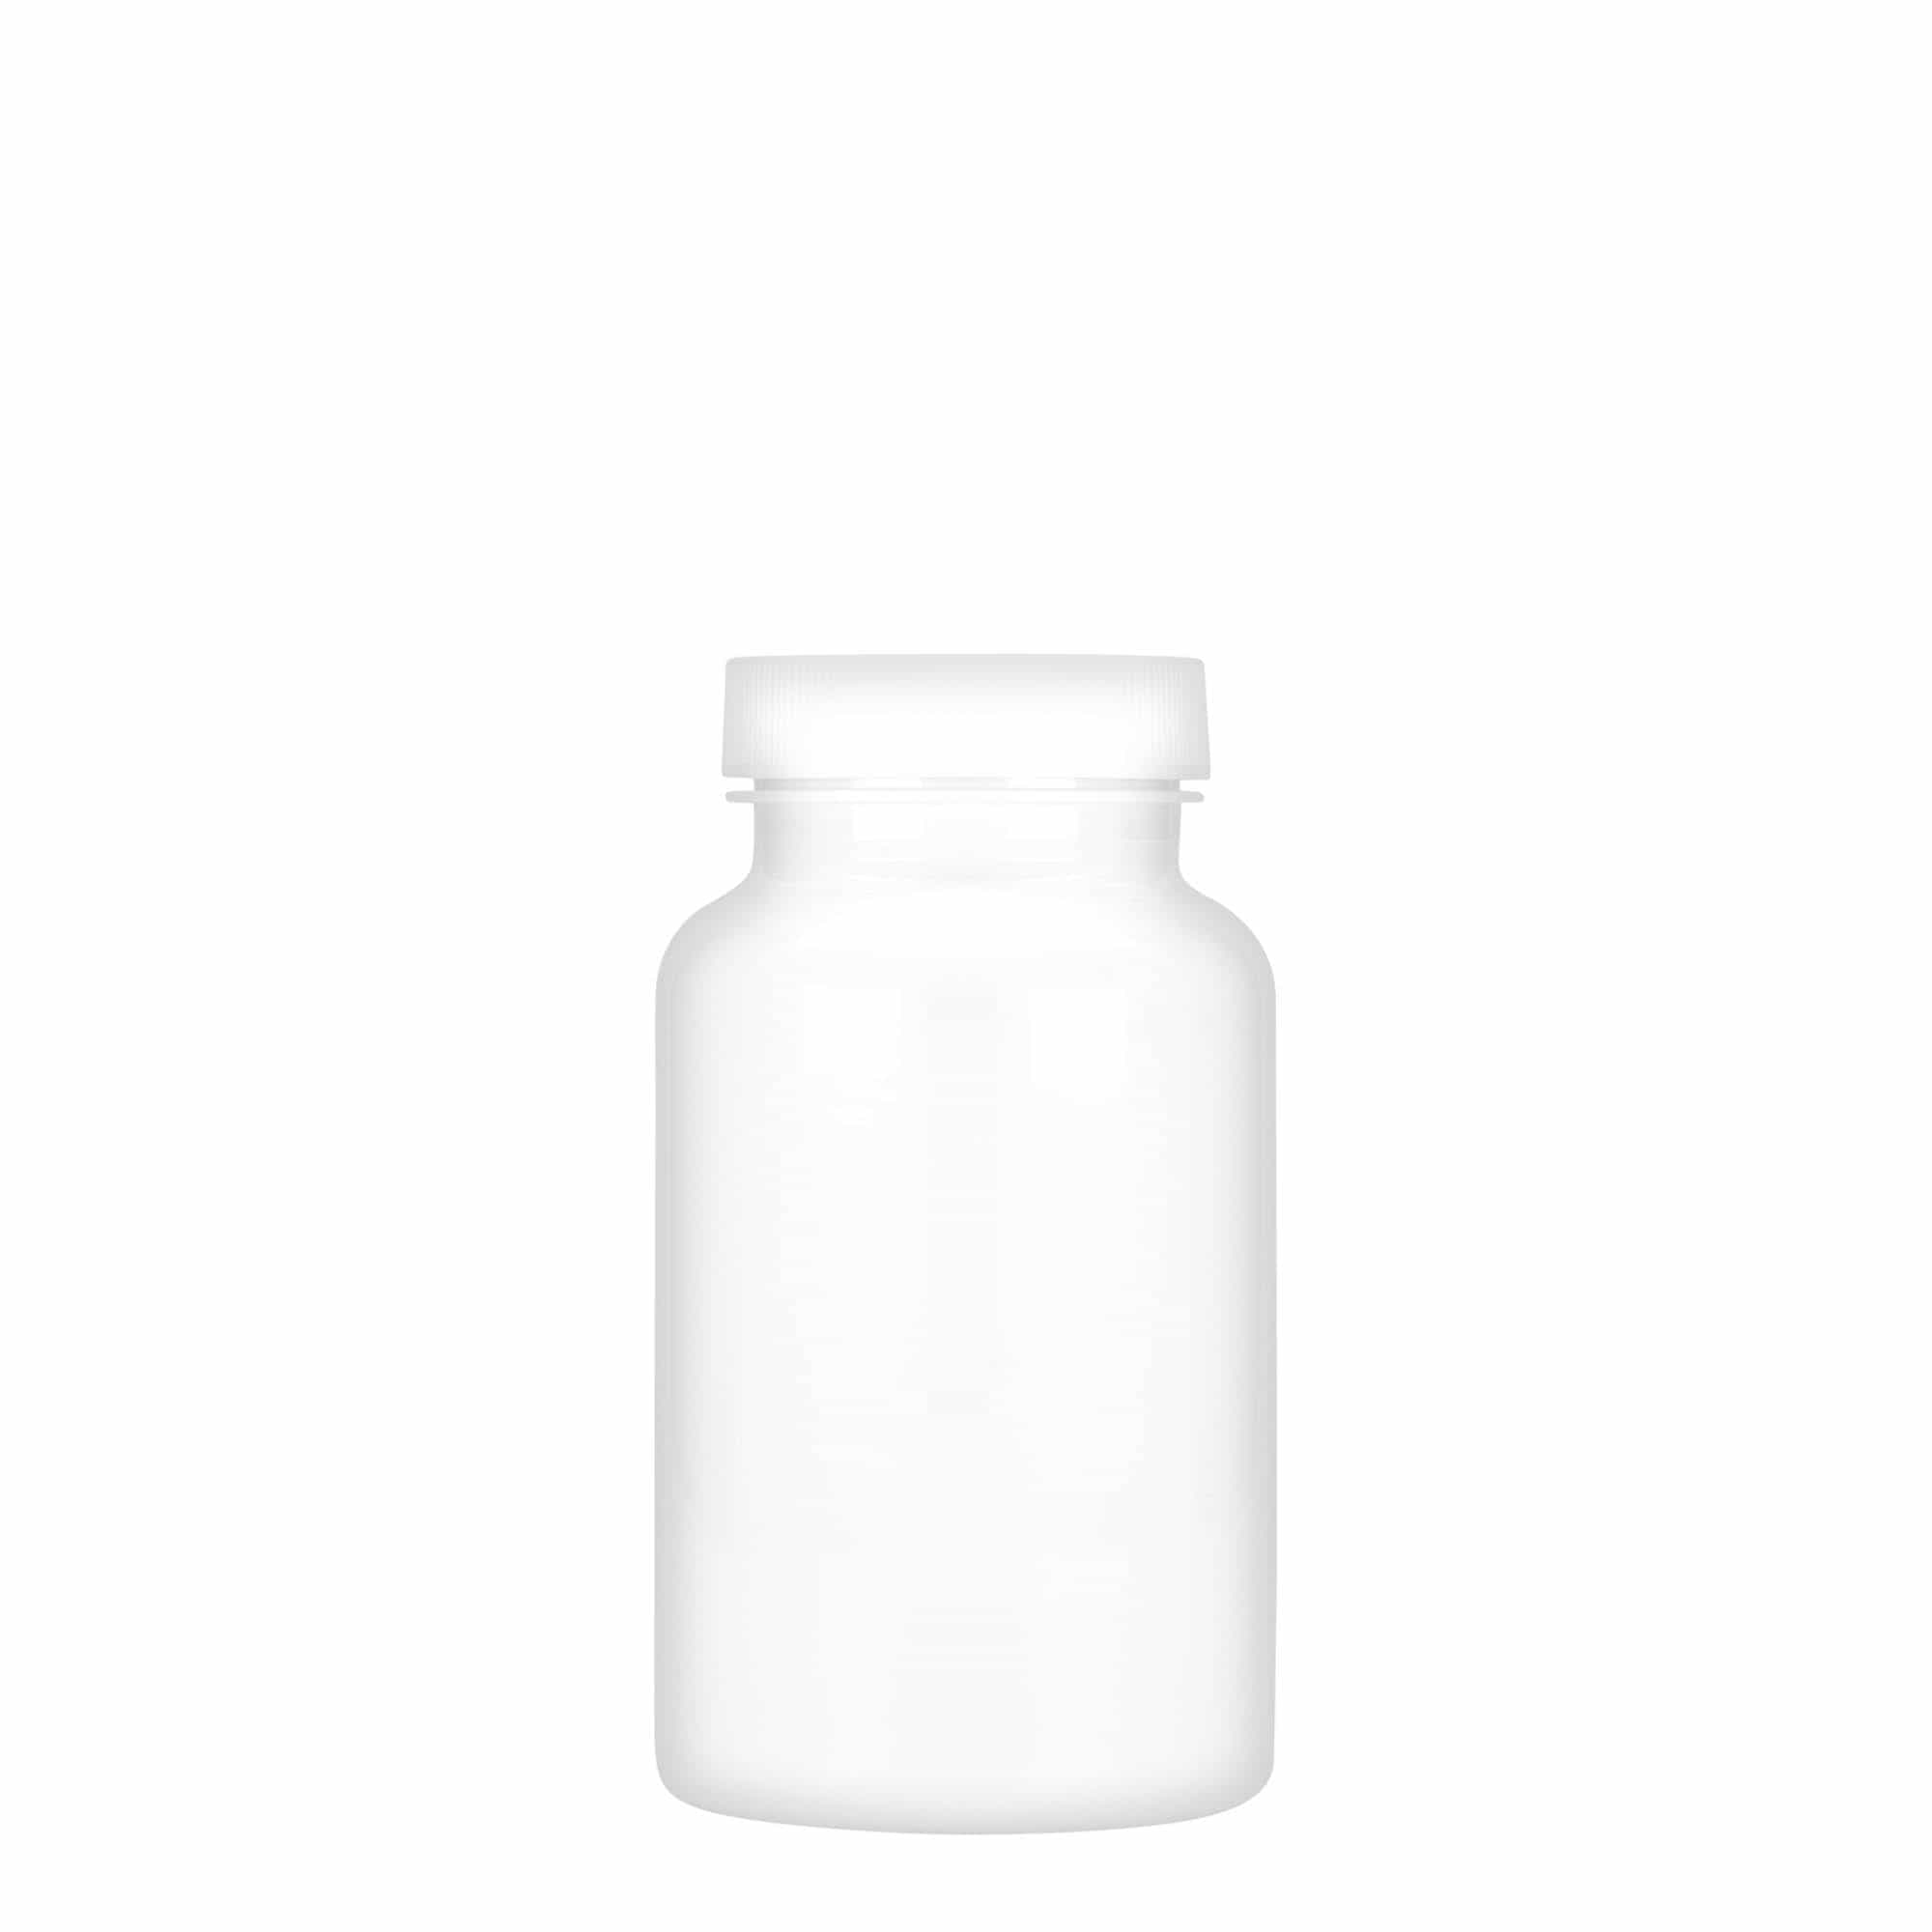 PET dóza 200 ml, plast, bílá, uzávěr: GPI 45/400